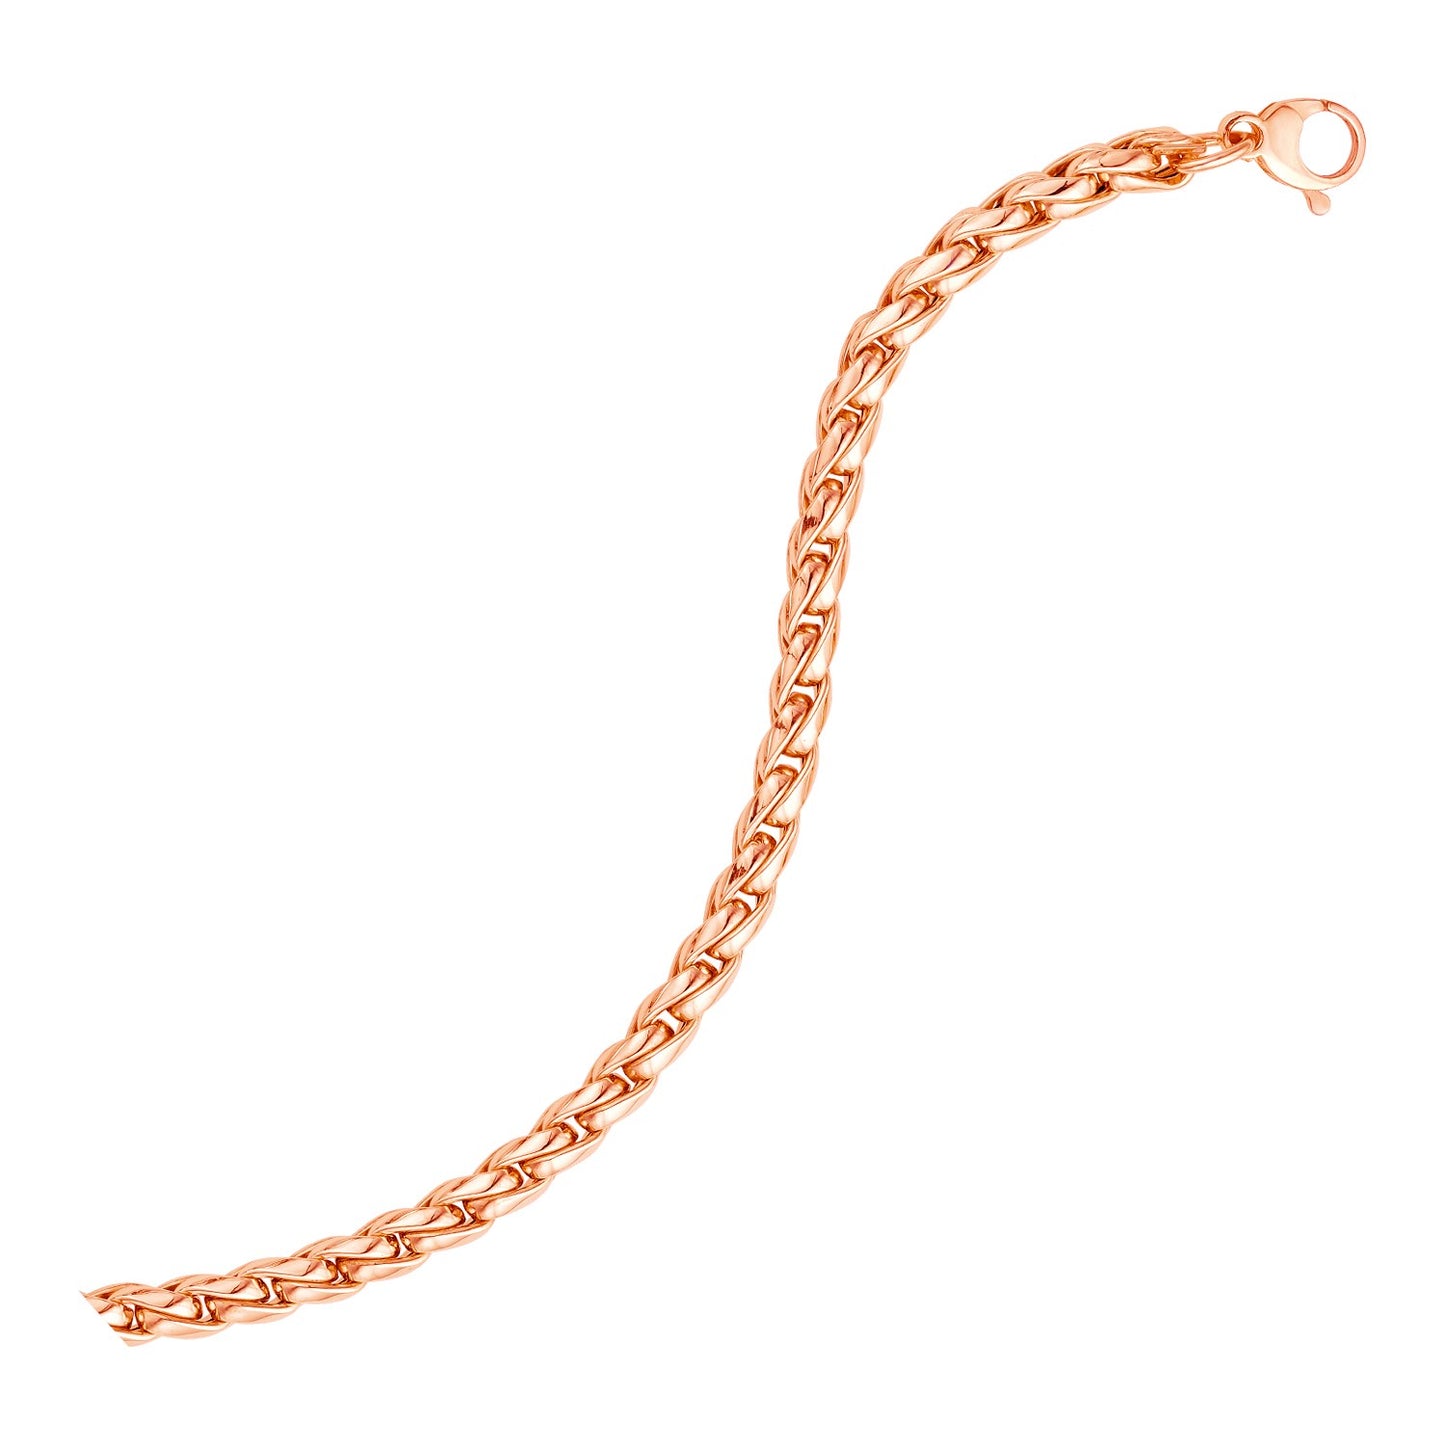 14k Rose Gold 7 1/2 inch Round Curb Chain Bracelet